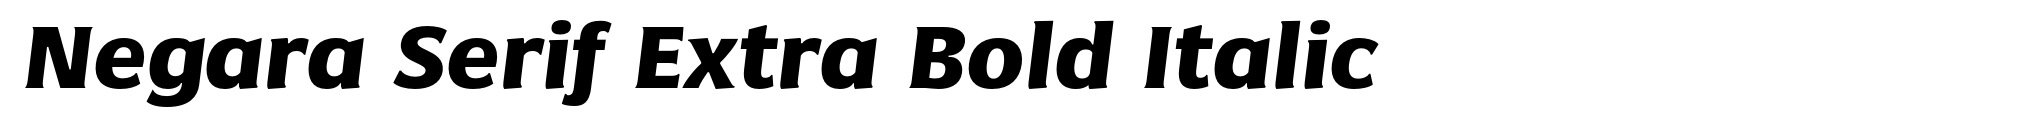 Negara Serif Extra Bold Italic image